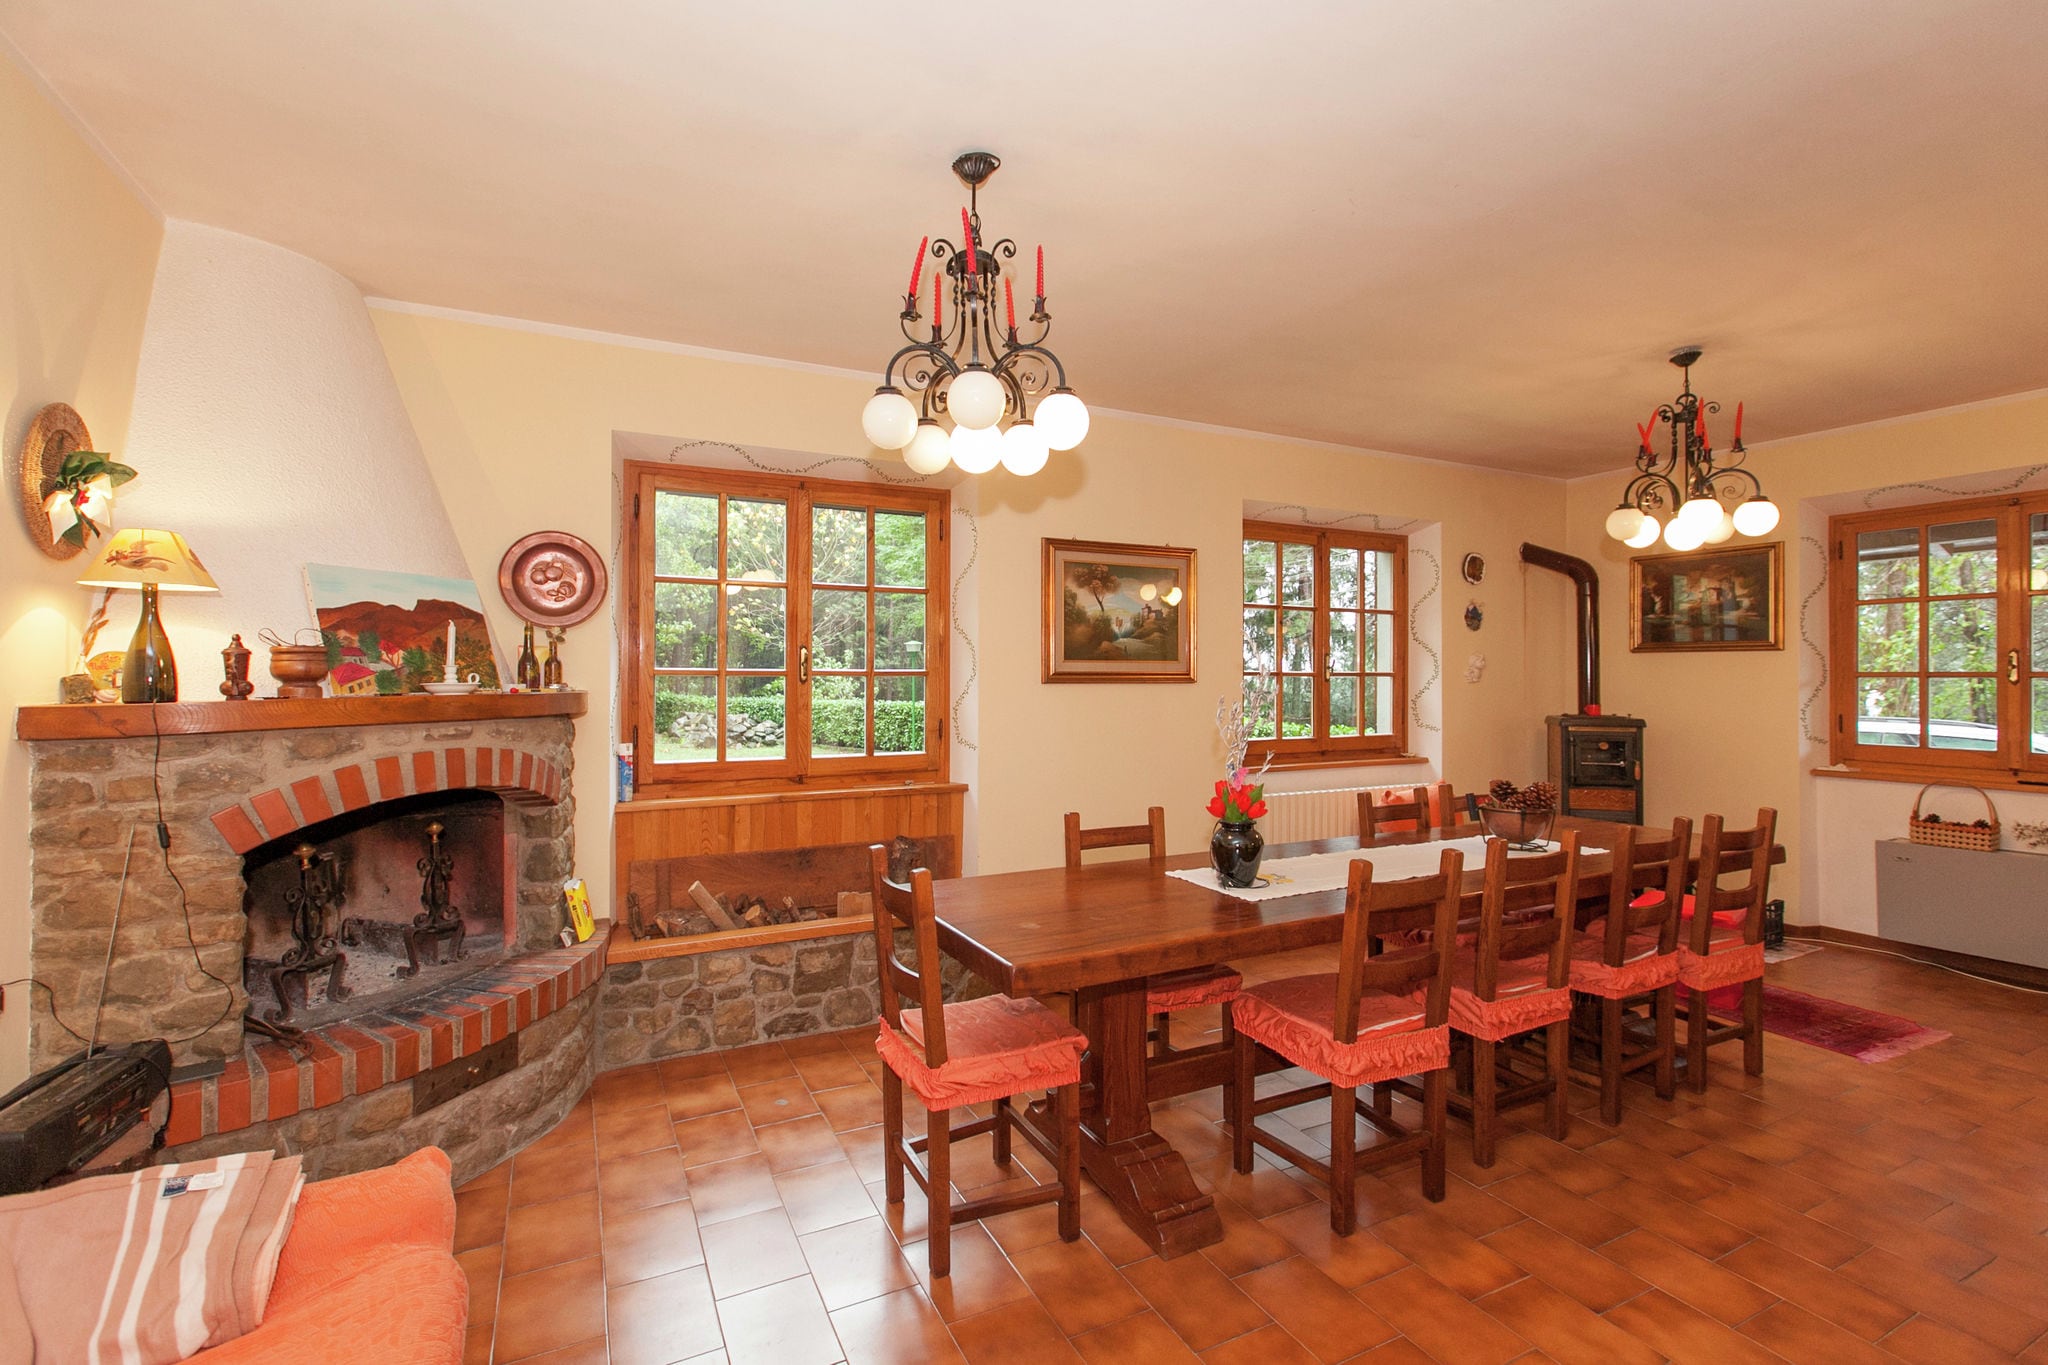 Holiday Home in Badia Prataglia with Garden, BBQ, Fireplace